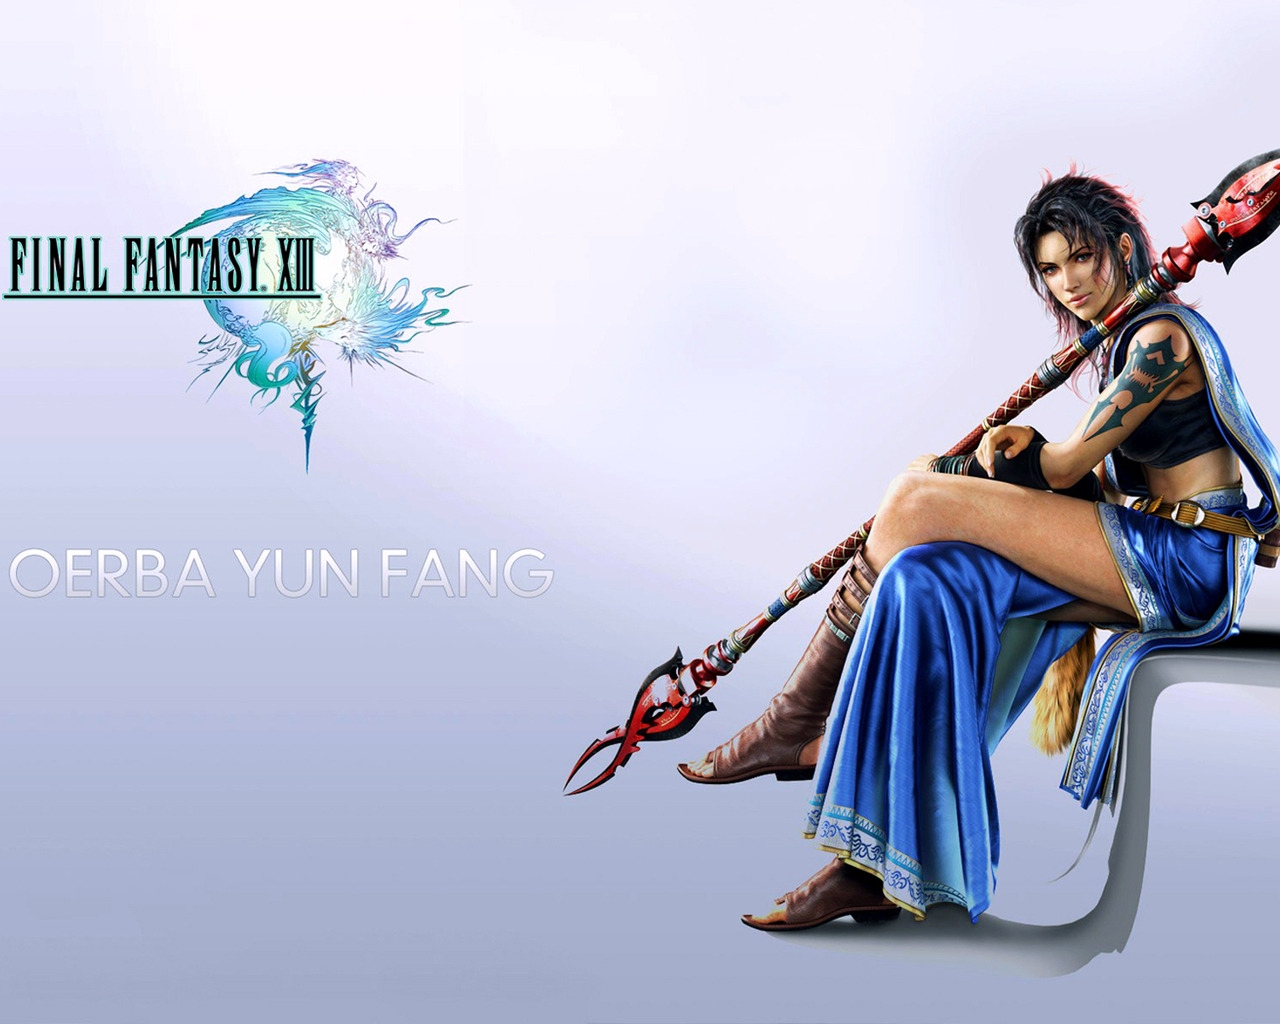 Final Fantasy XIII Oerba Yun Fang for 1280 x 1024 resolution